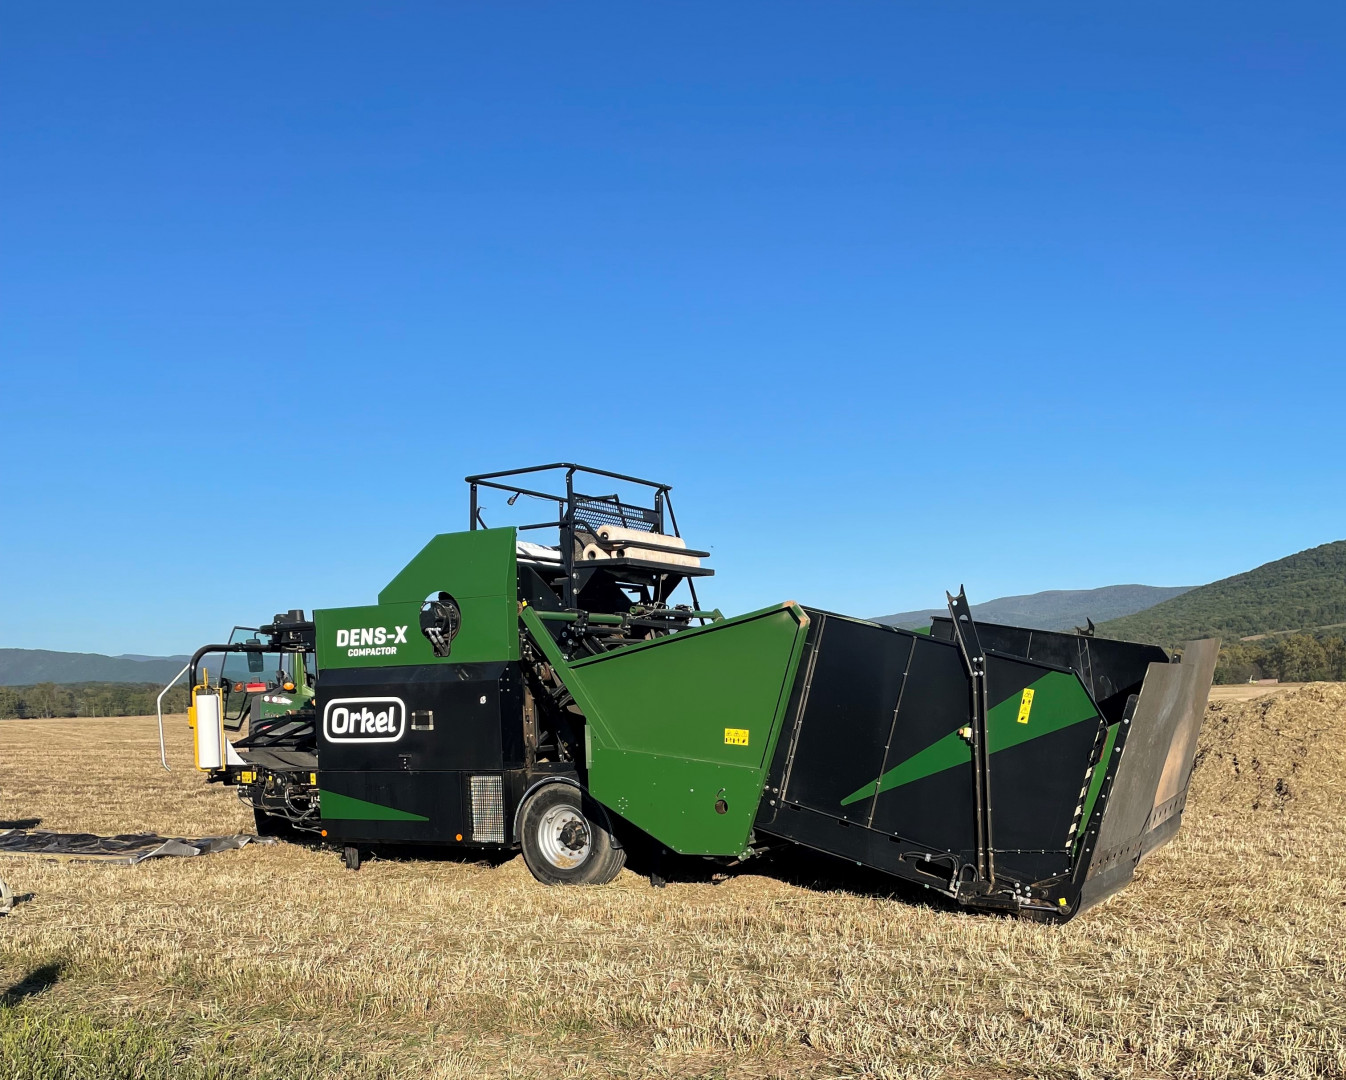 Orkel Dens-X compactor helping reducing crop loss